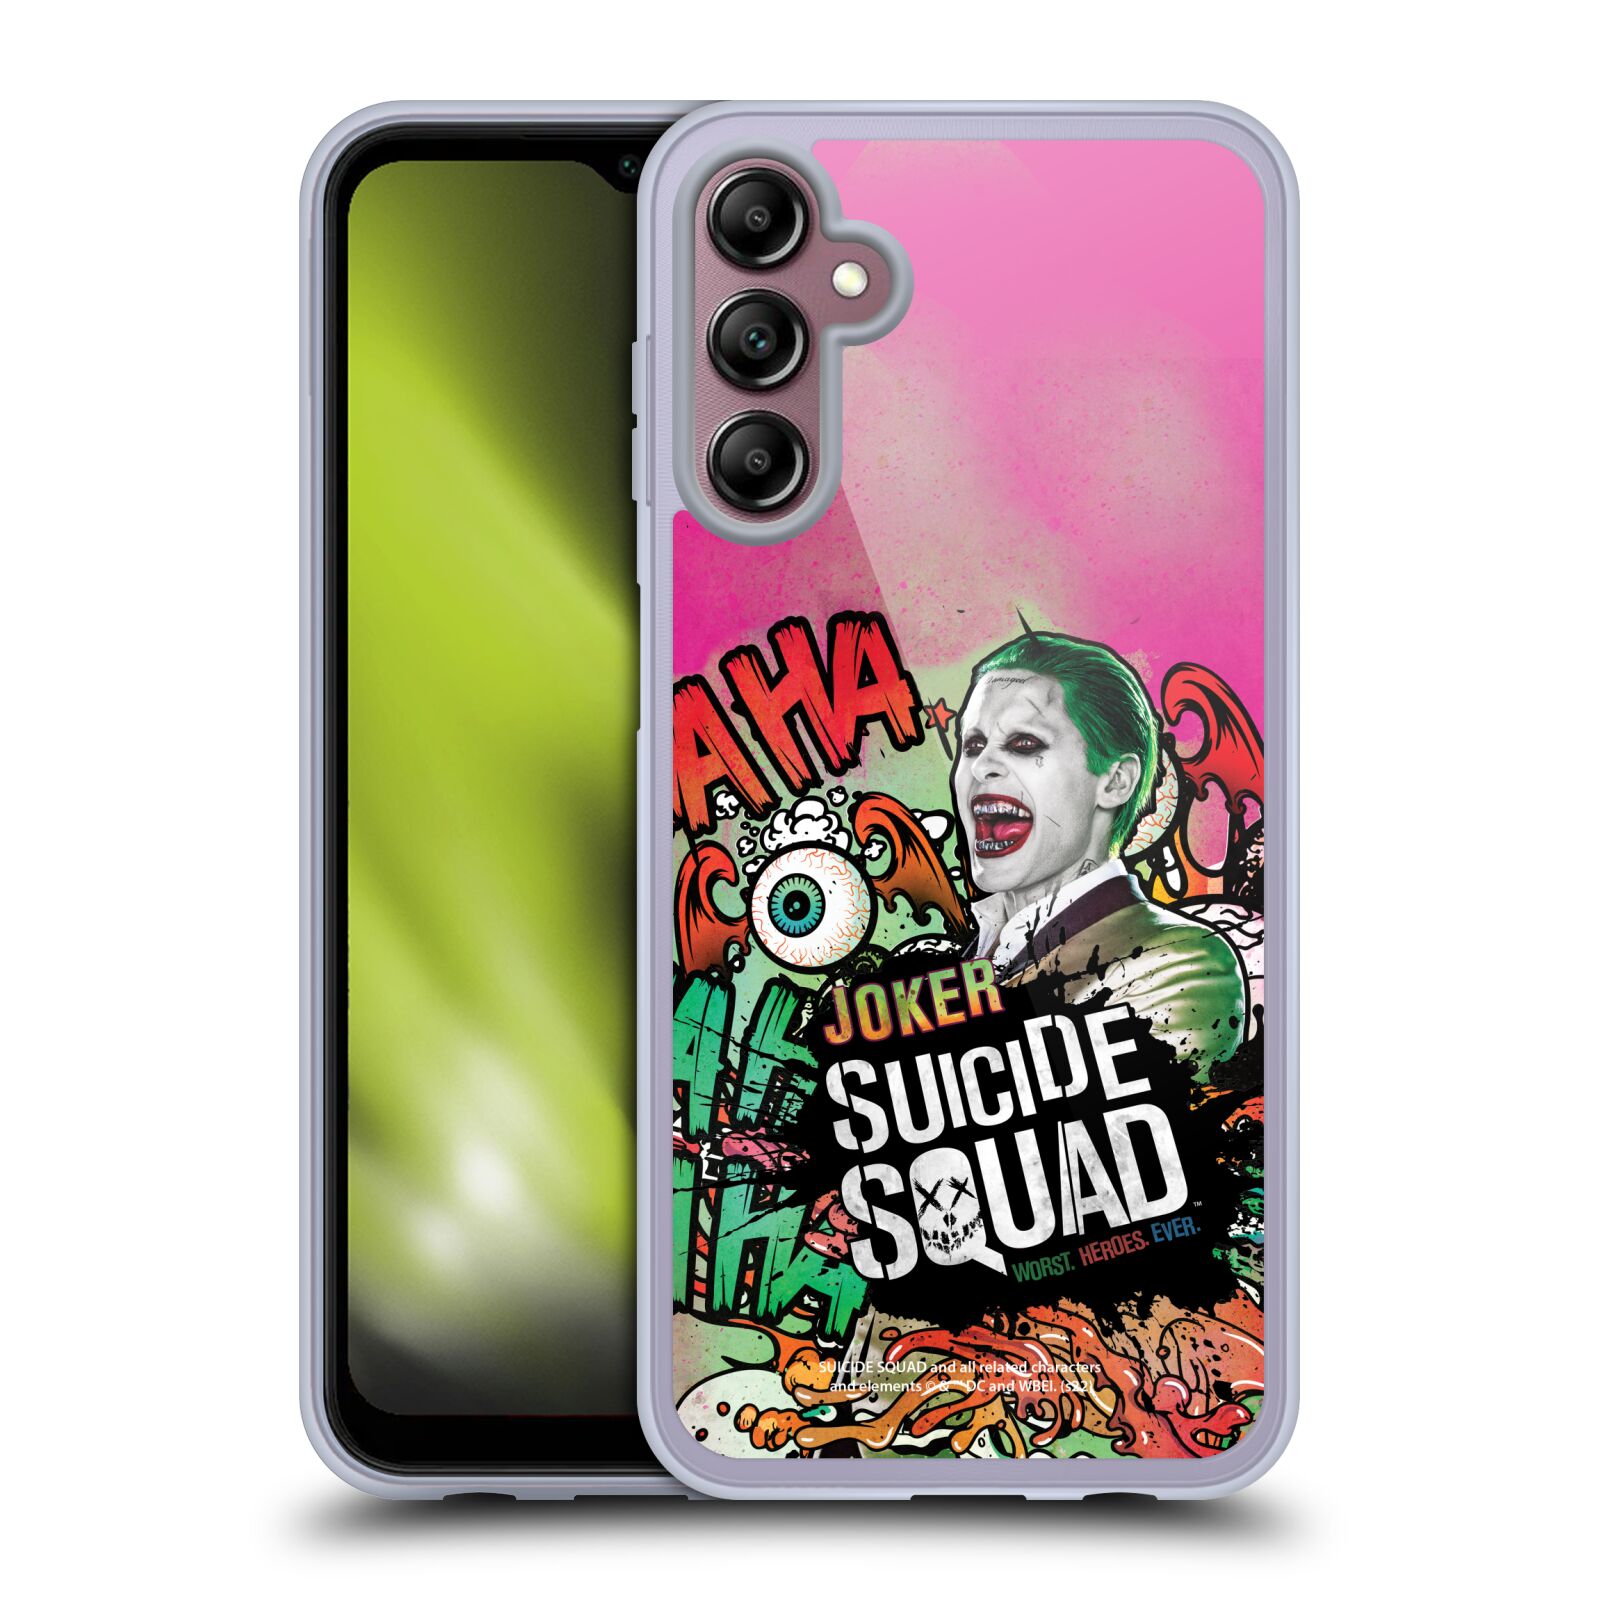 Silikonové pouzdro na mobil Samsung Galaxy A14 5G / LTE - Suicide Squad - Joker (Silikonový kryt, obal, pouzdro na mobilní telefon Samsung Galaxy A14 5G / LTE s licencovaným motivem Suicide Squad - Joker)